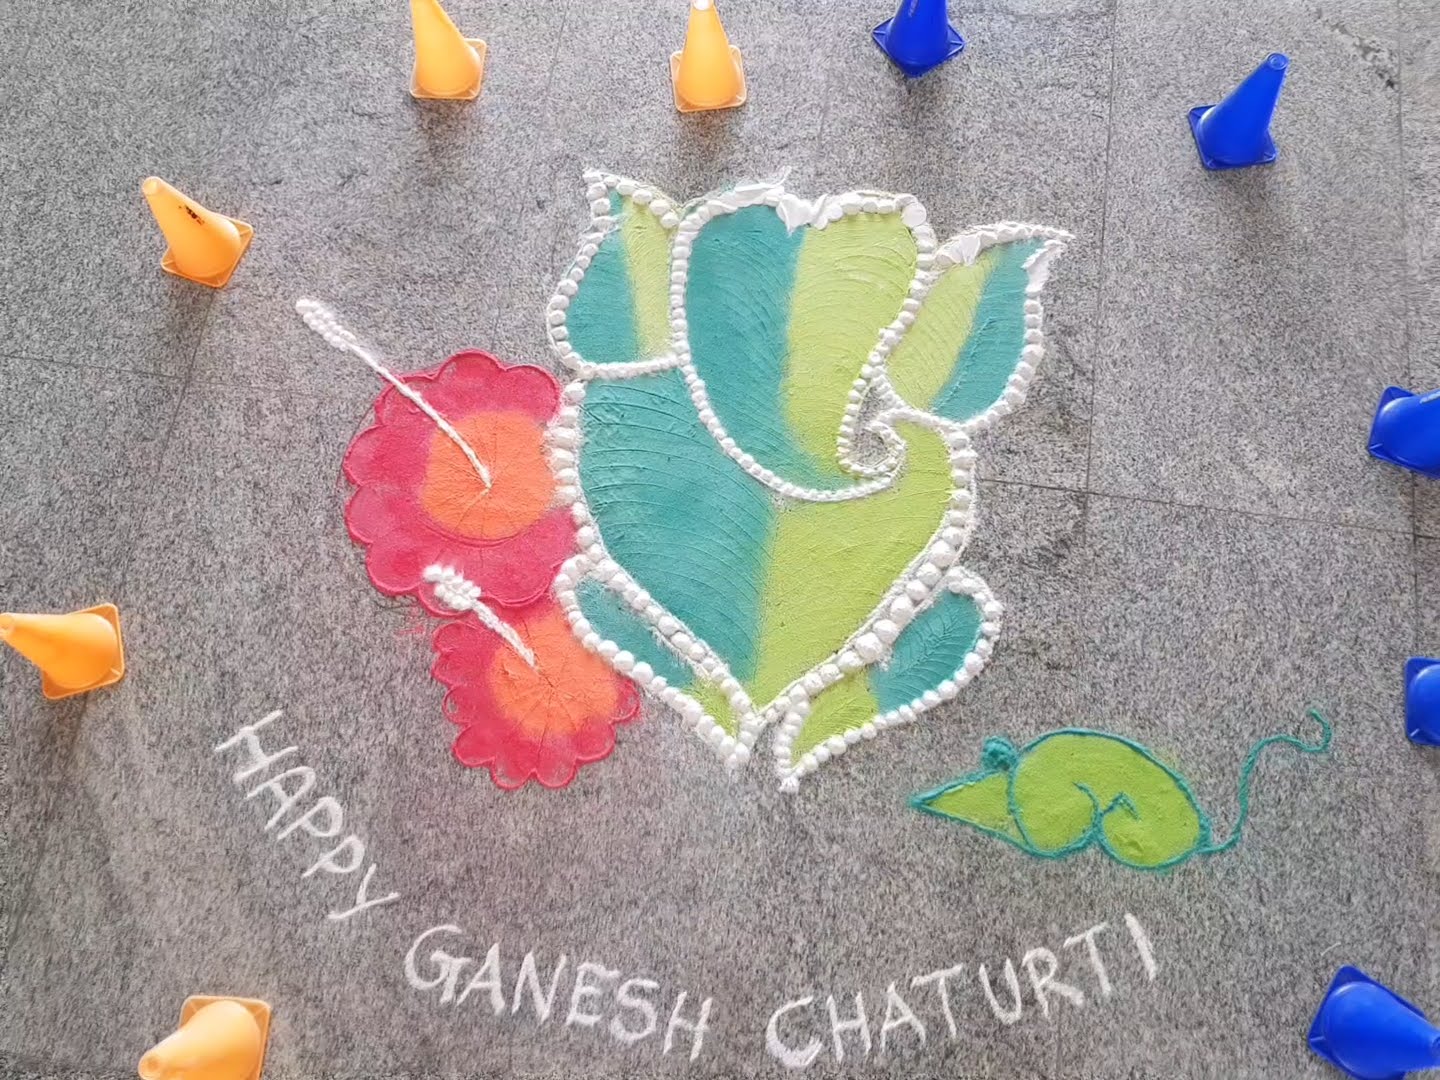 Ganesh Chaturthi 2019